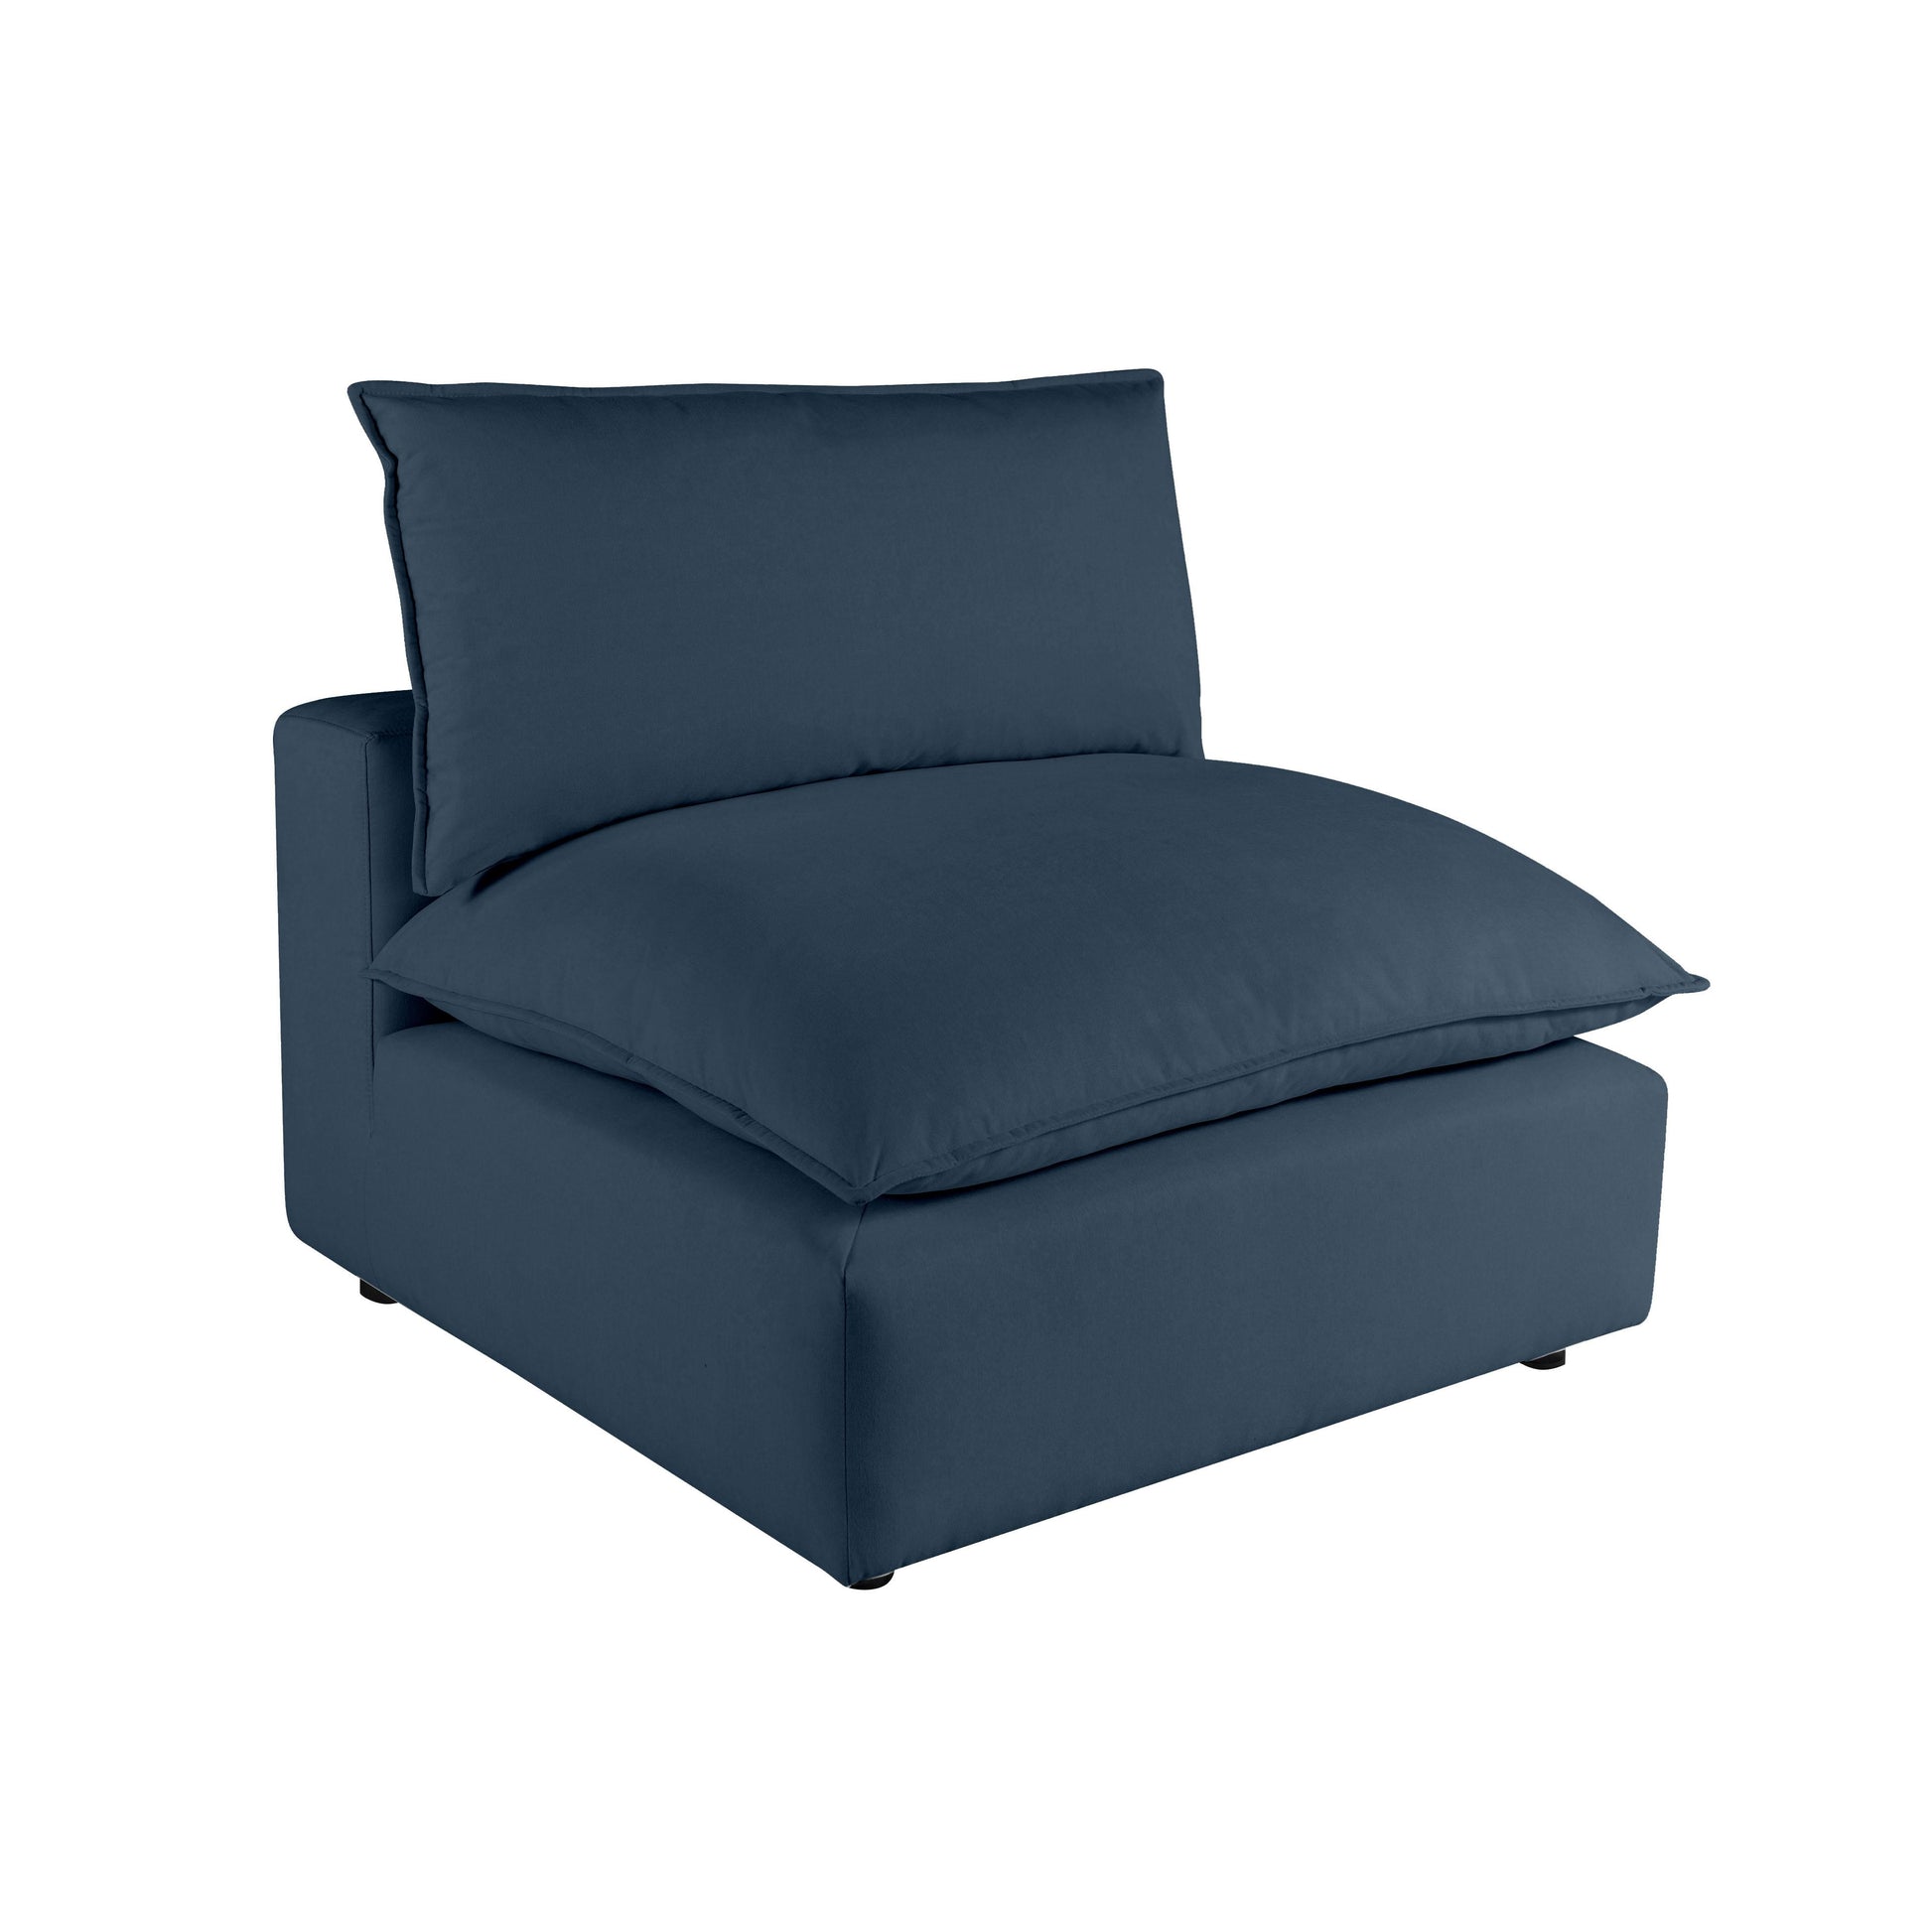 Tov Furniture Cali Navy Armless Chair